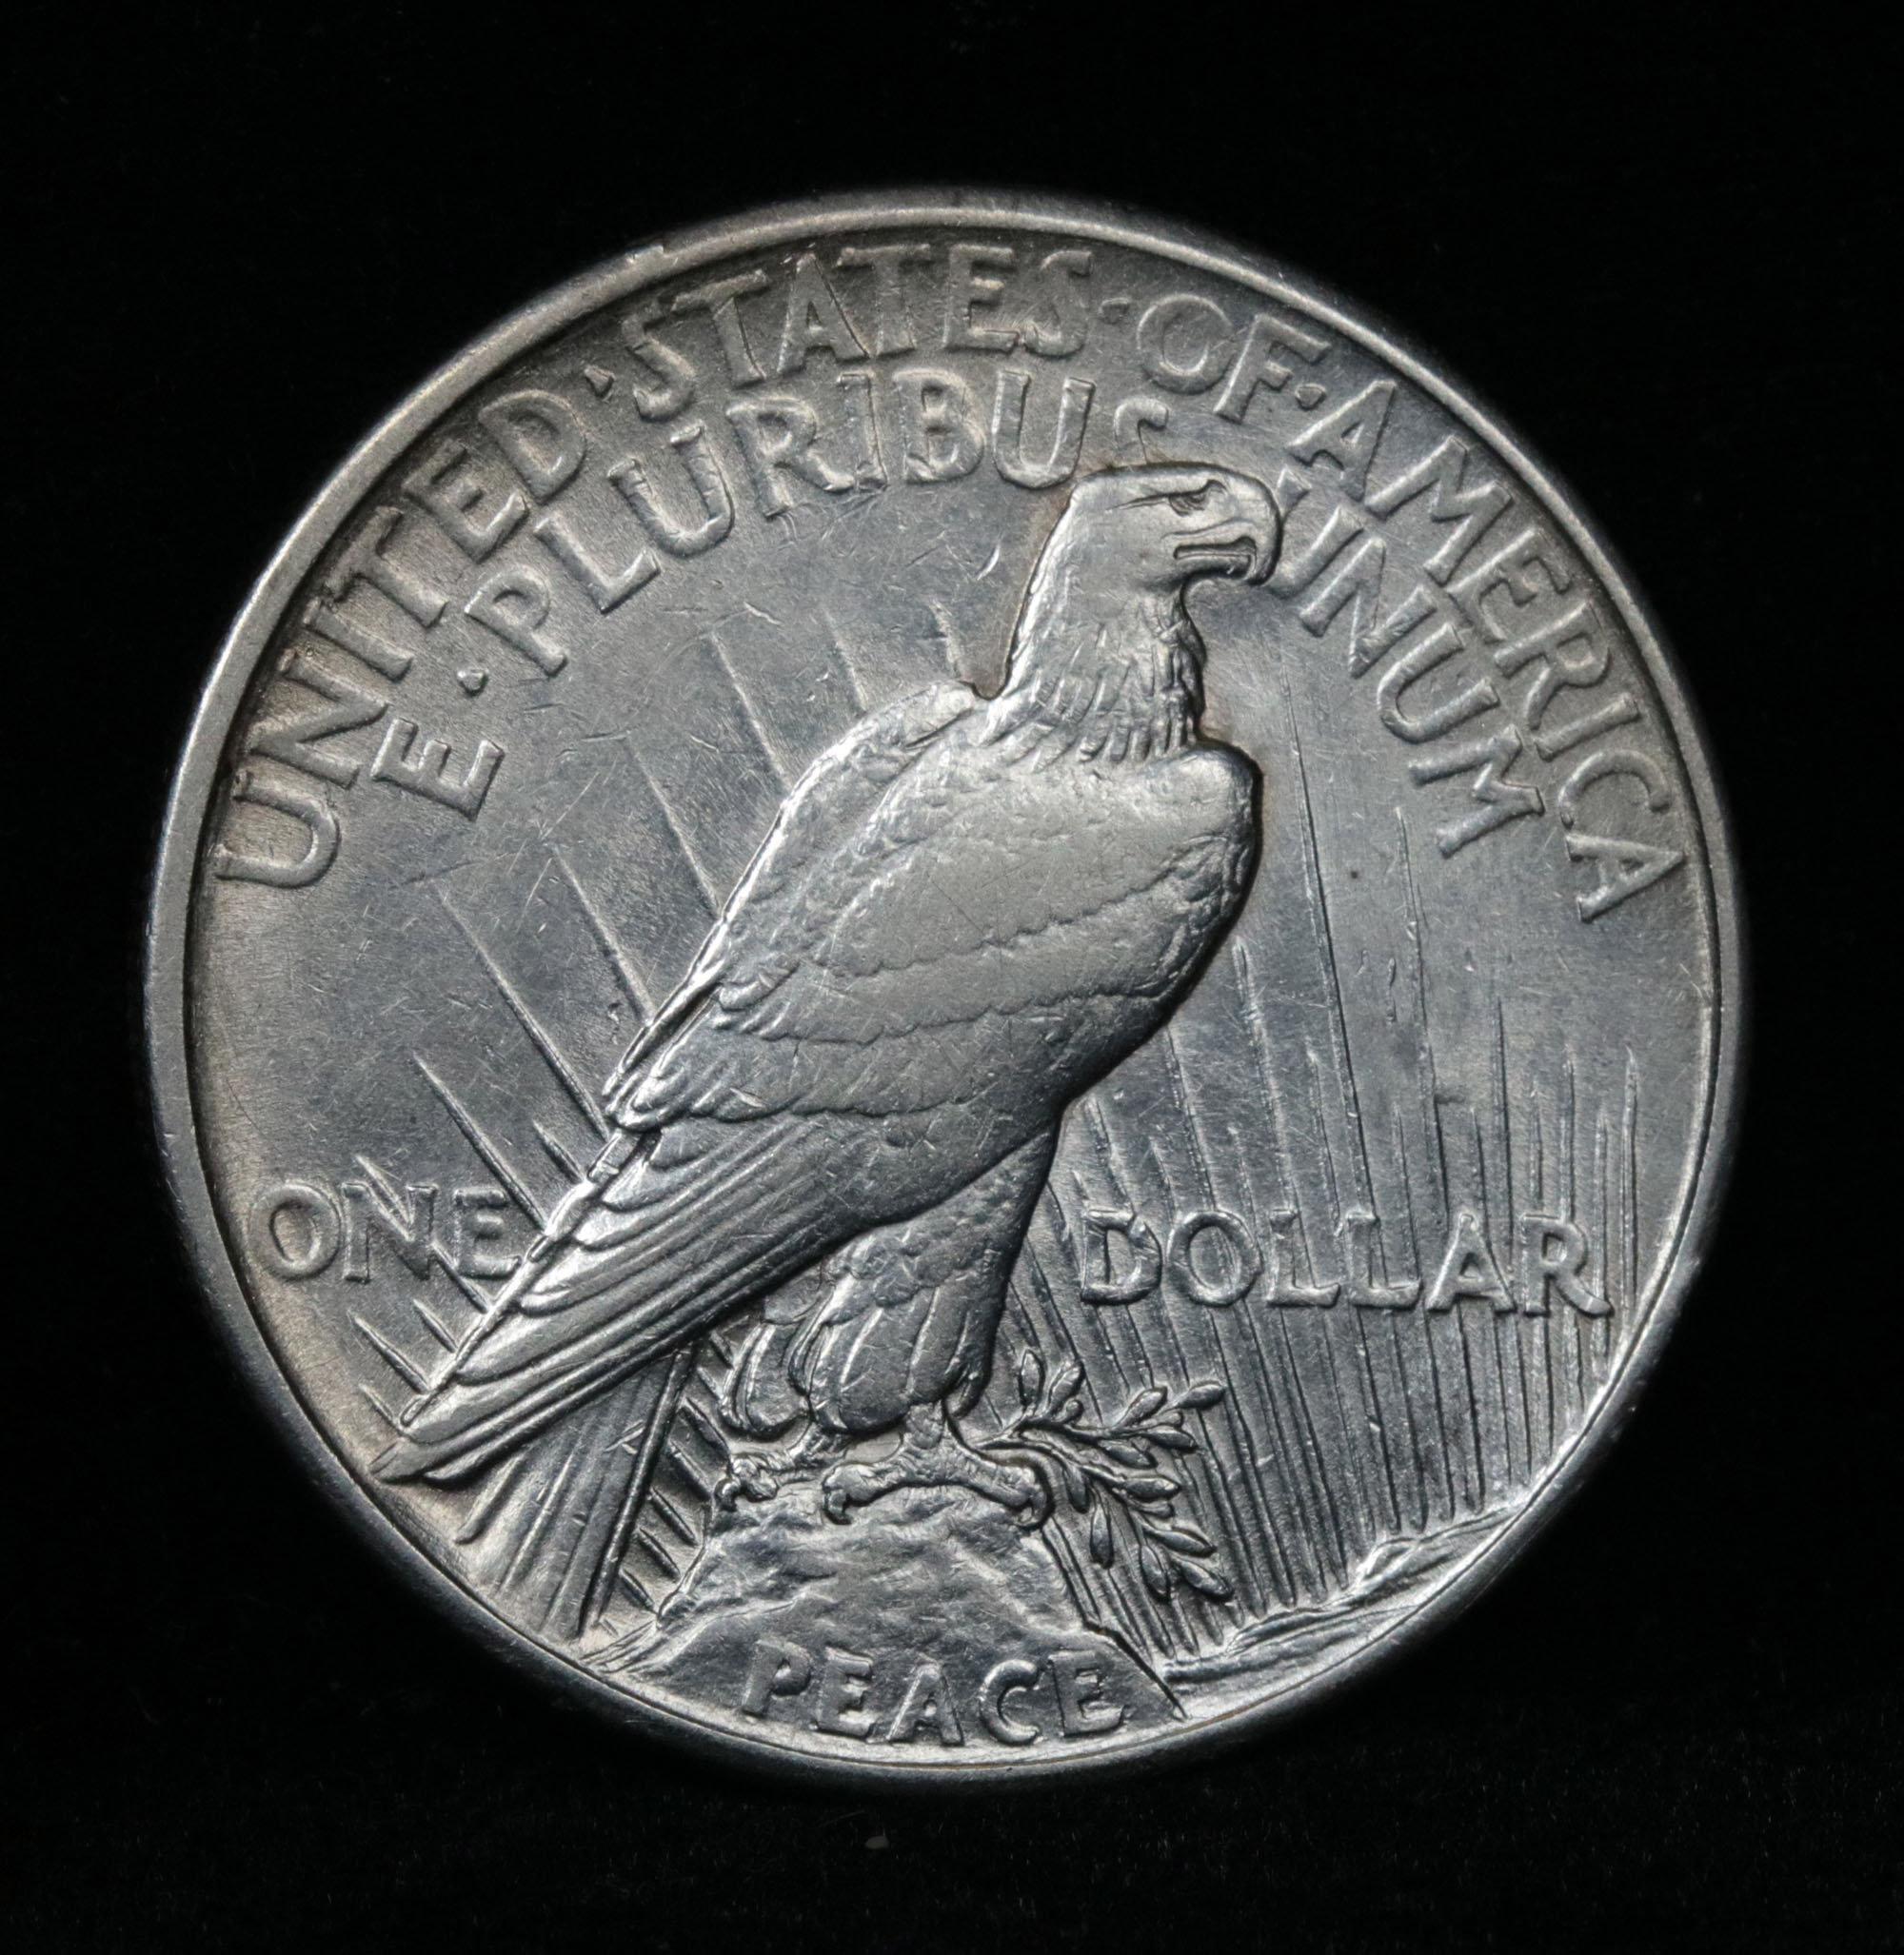 1921-p Peace Dollar $1 Grades xf+